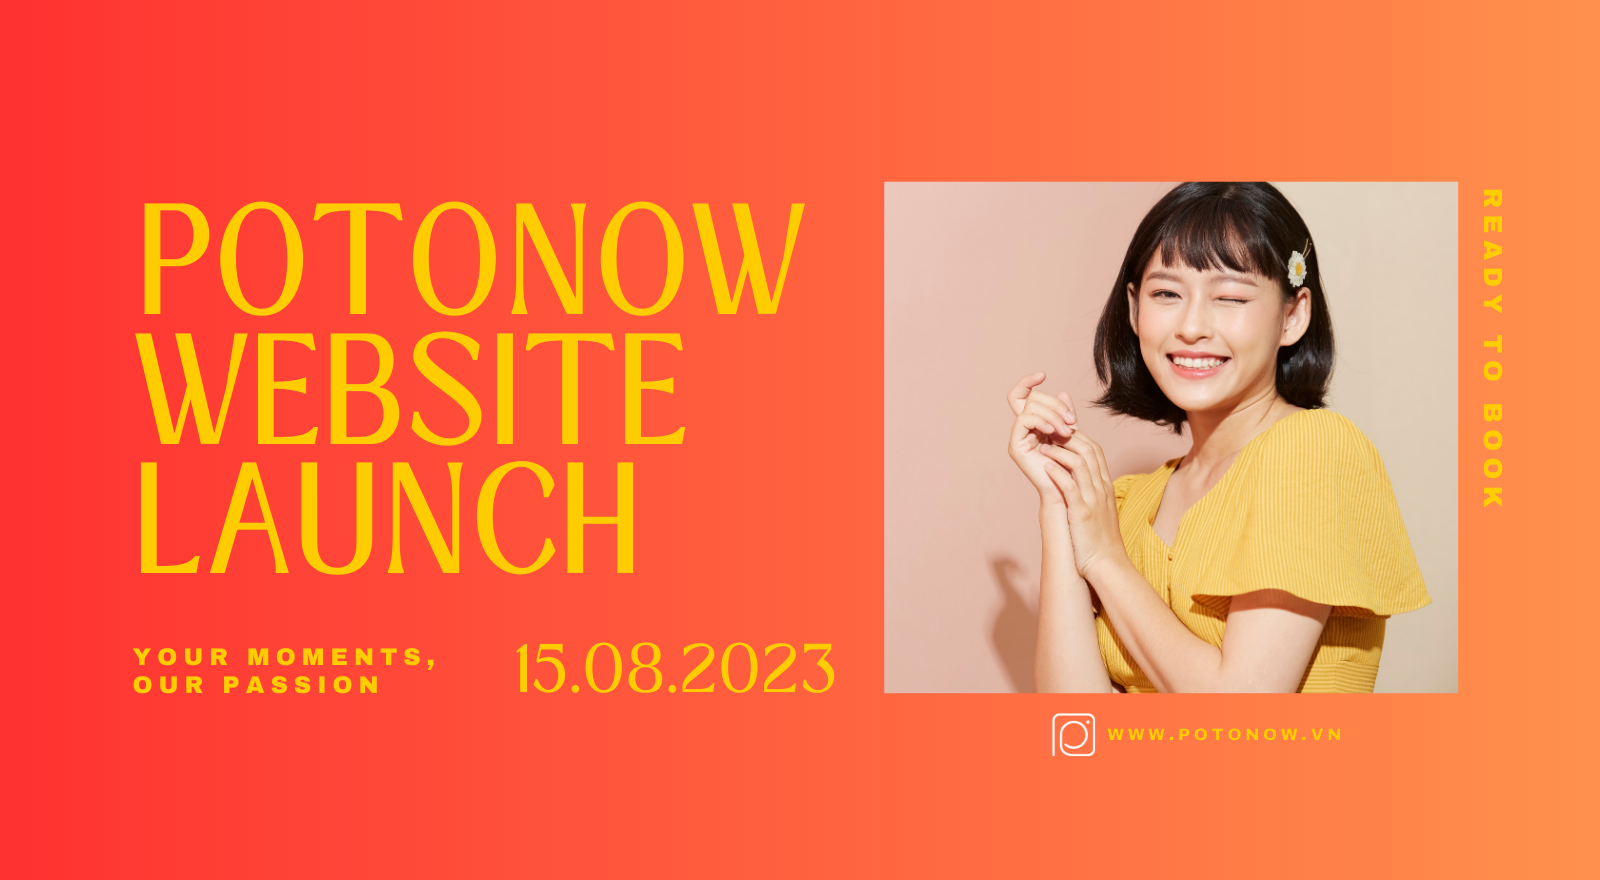 Potonow Website Launch